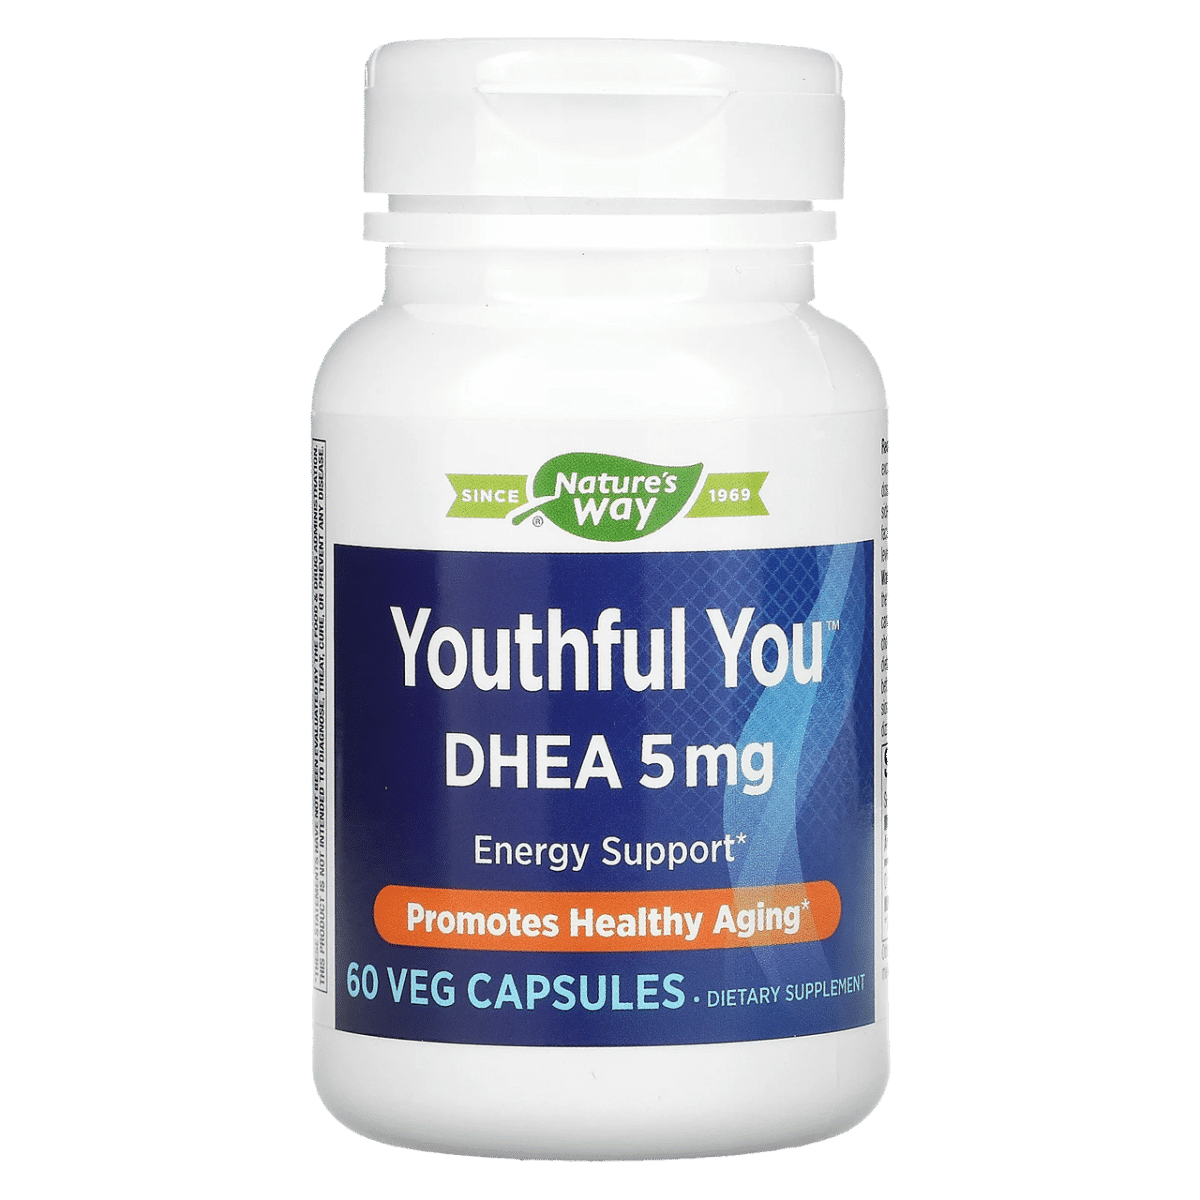 Youthful You DHEA 5mg